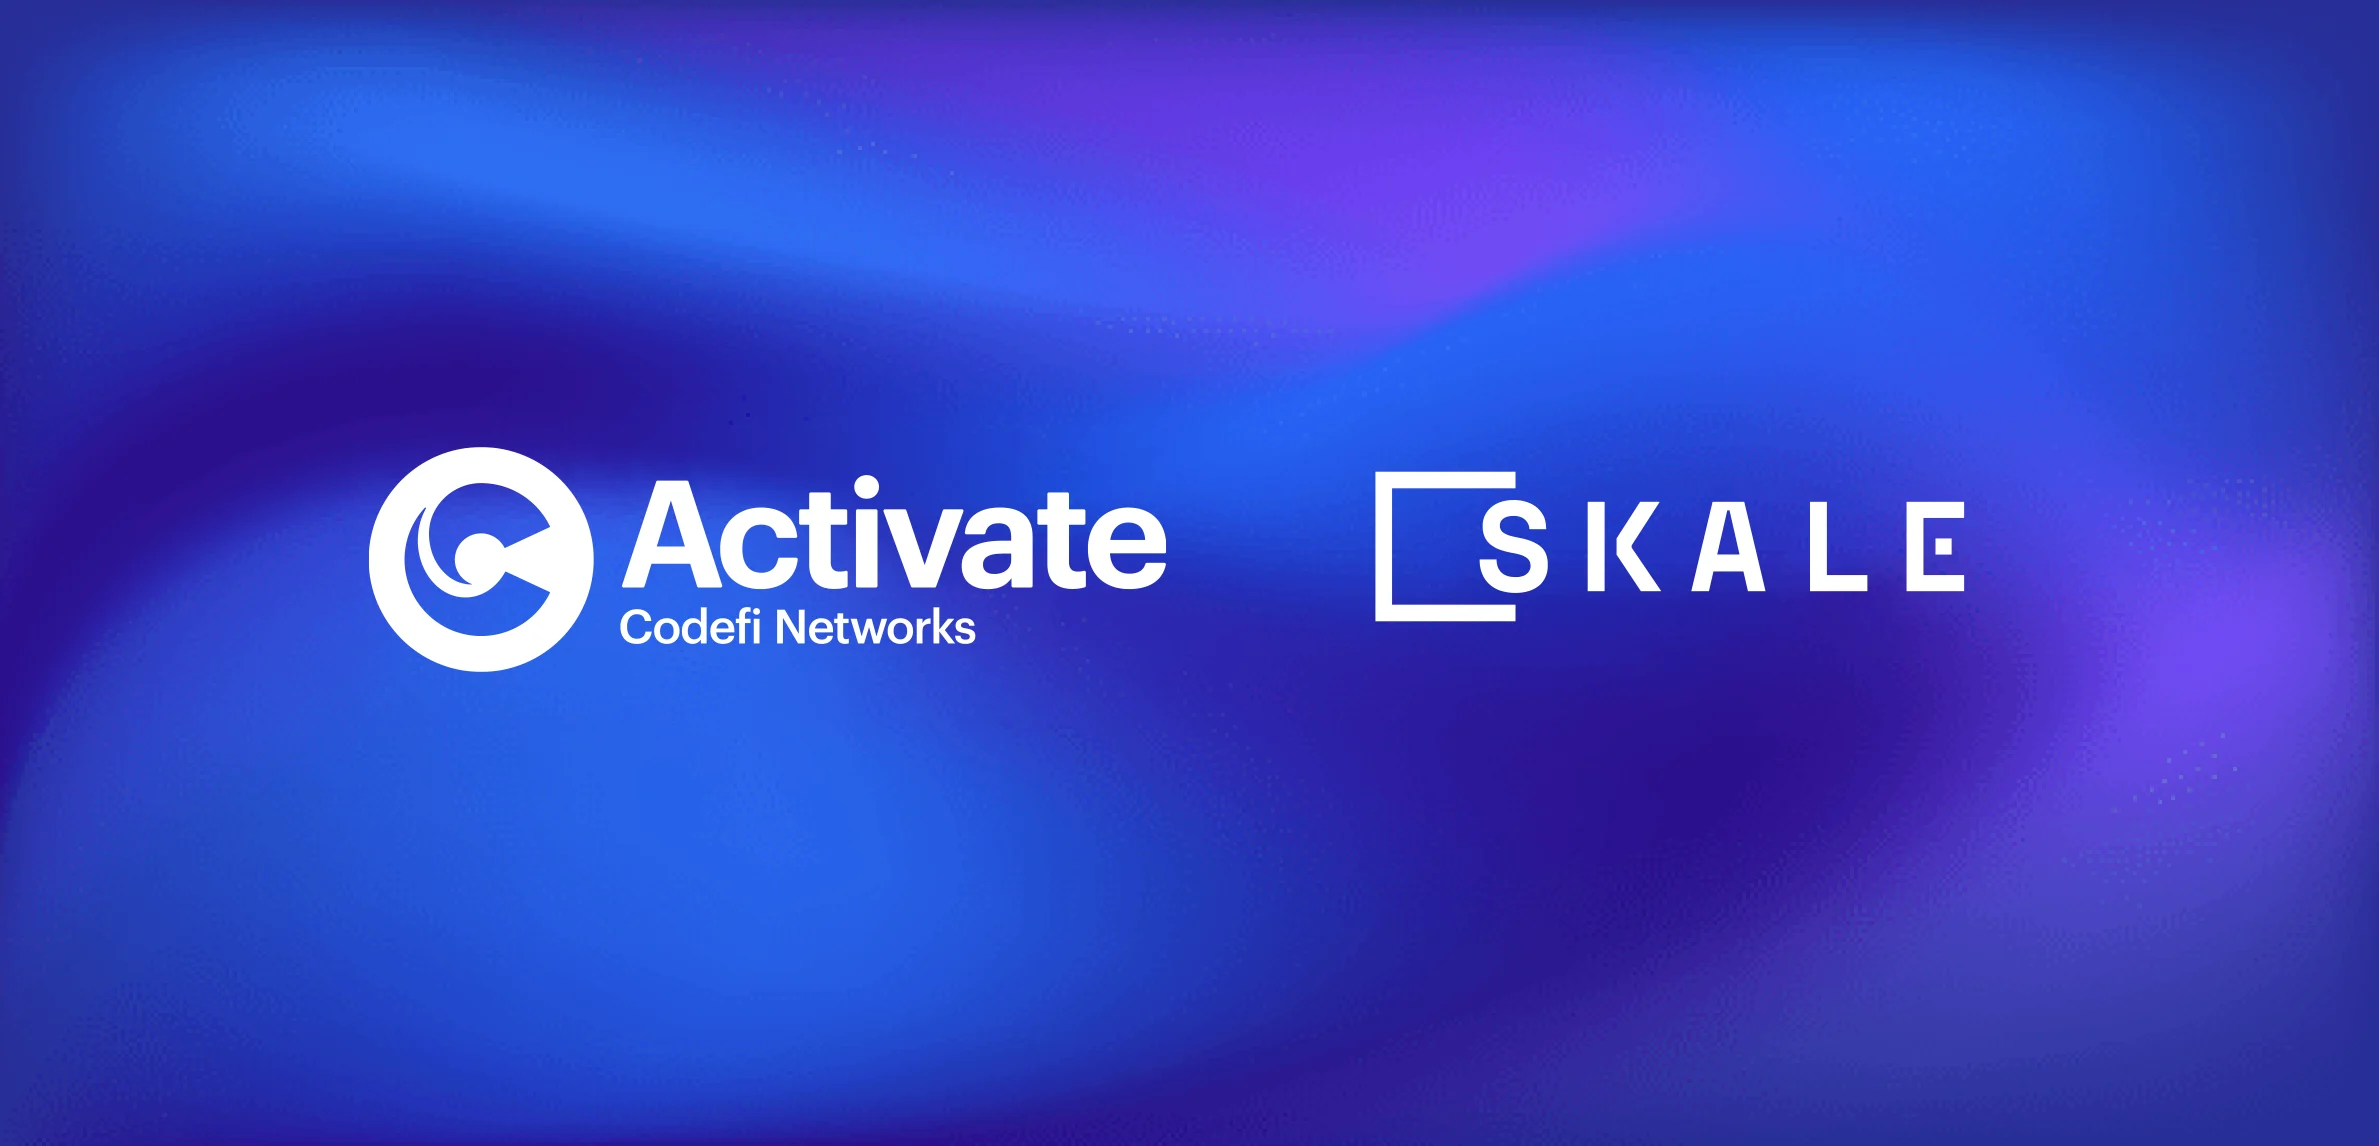 Image: ConsenSys Announces SKALE Network Token Launch on Codefi Platform